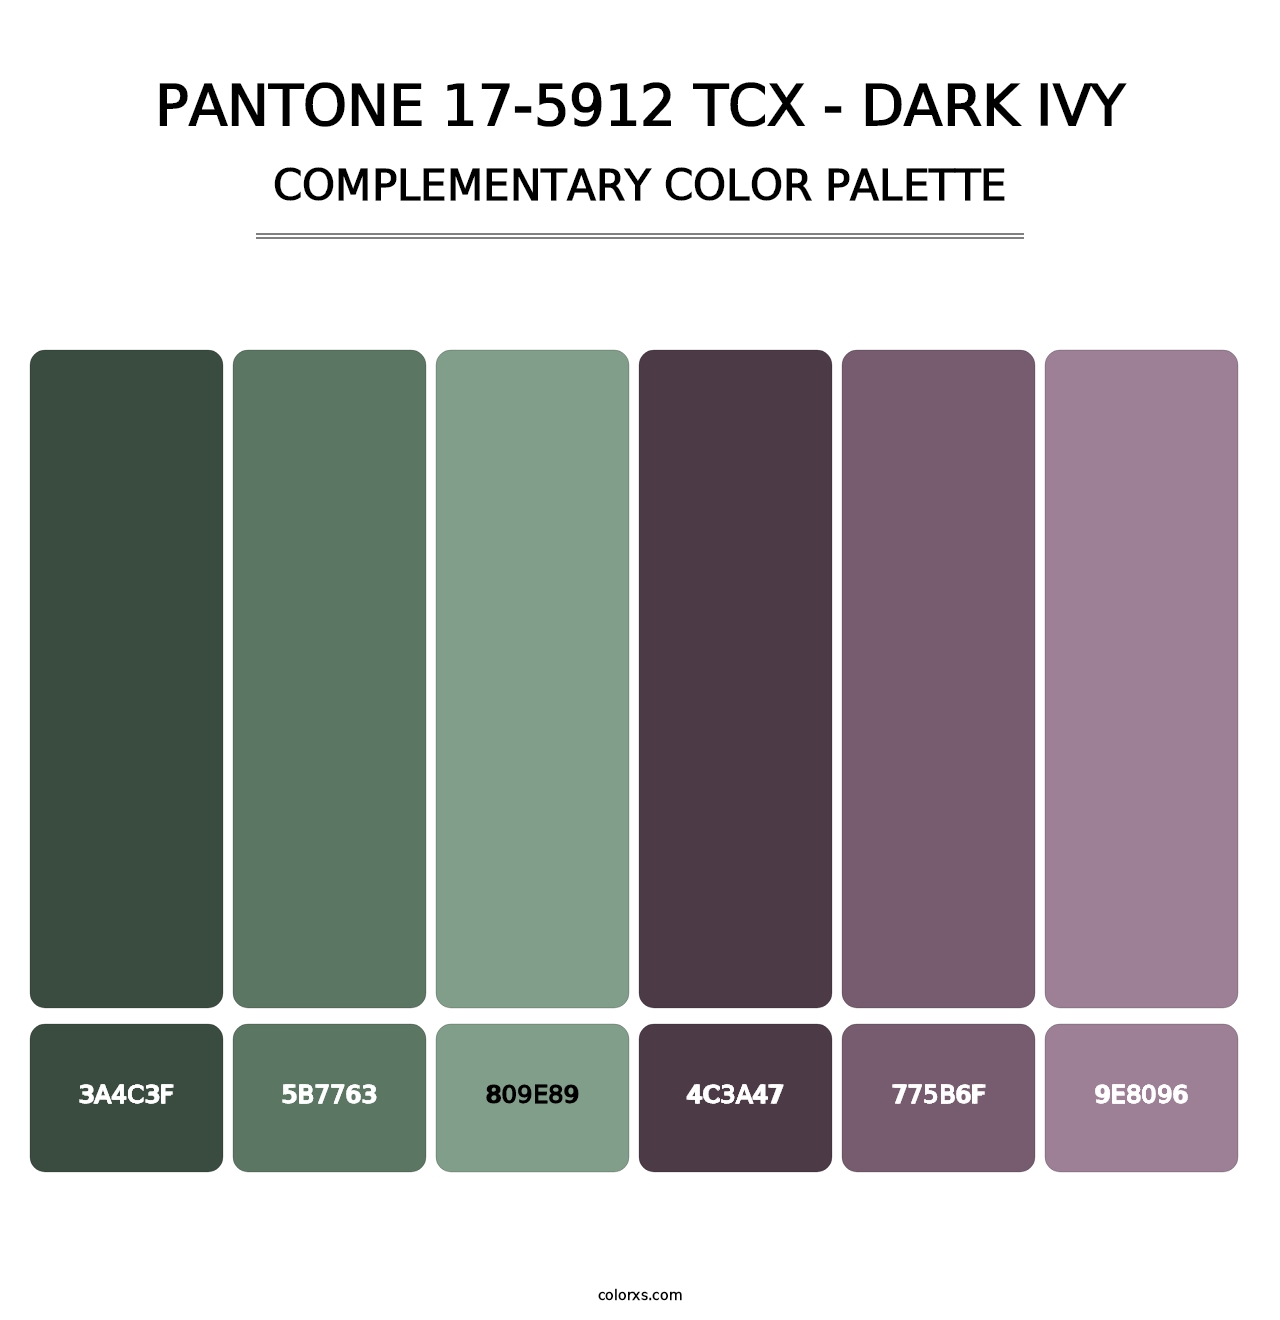 PANTONE 17-5912 TCX - Dark Ivy - Complementary Color Palette